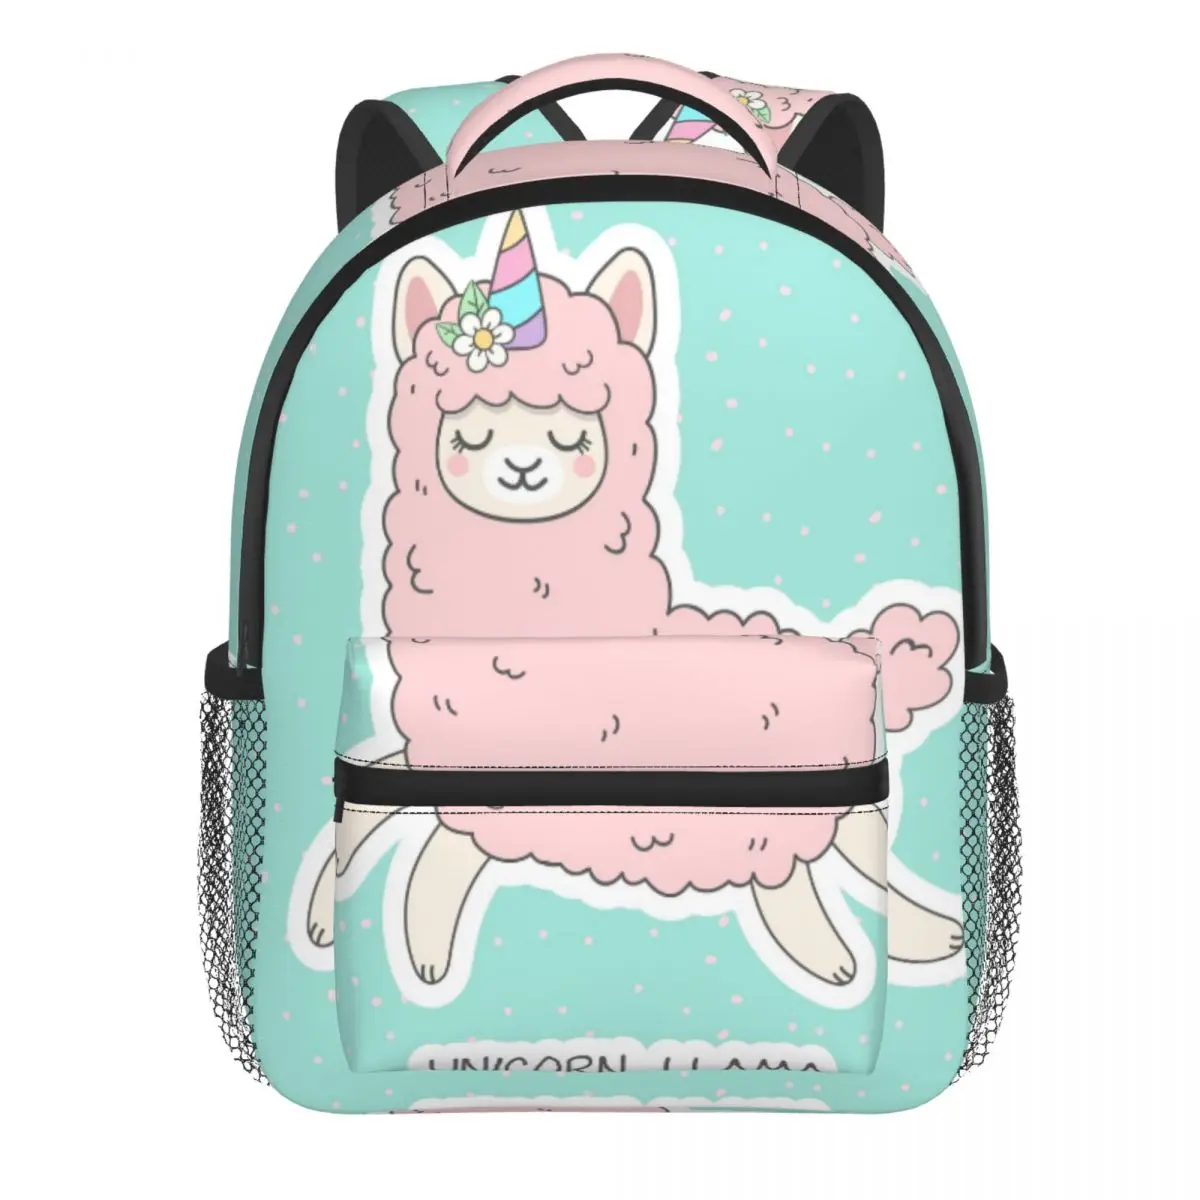 Cute Pink Fluffy Unicorn Llama Baby Backpack Kindergarten Schoolbag Kids Children School Bag